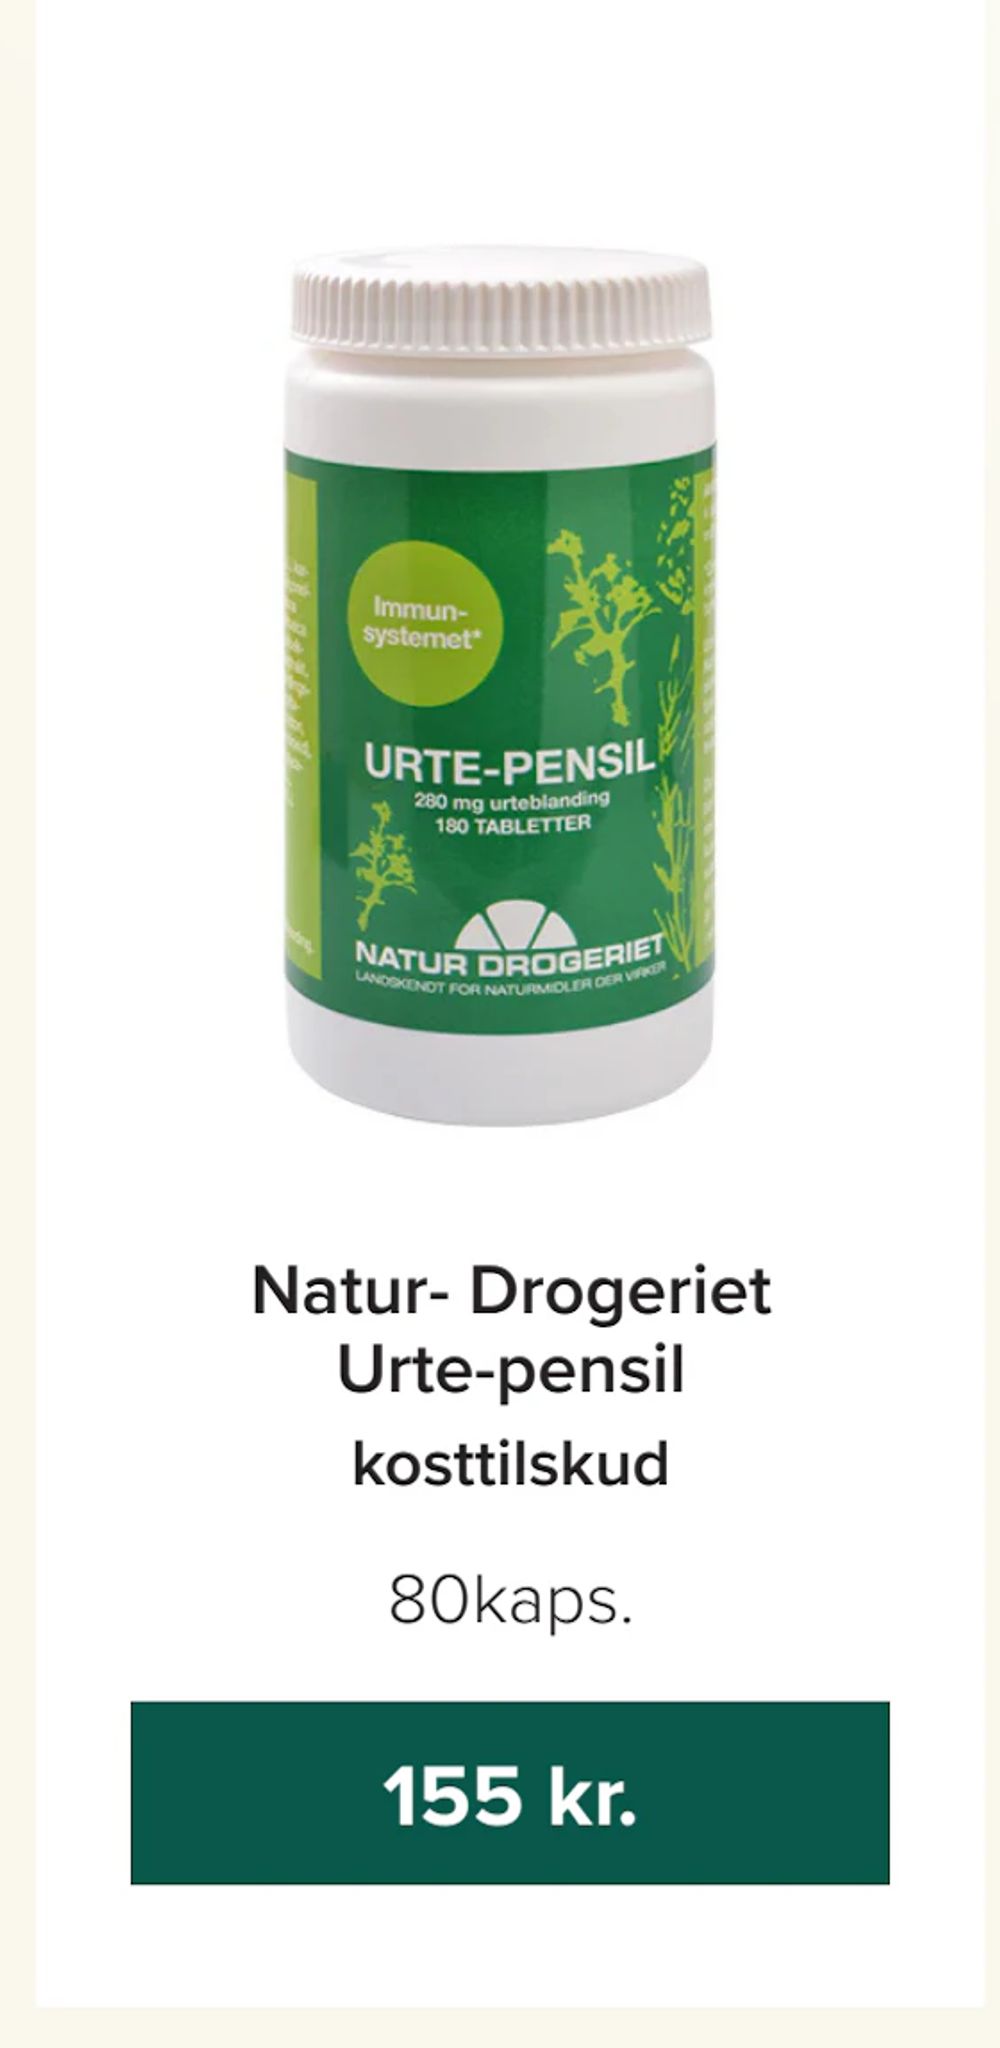 Tilbud på Natur- Drogeriet Urte-pensil fra Helsemin til 155 kr.